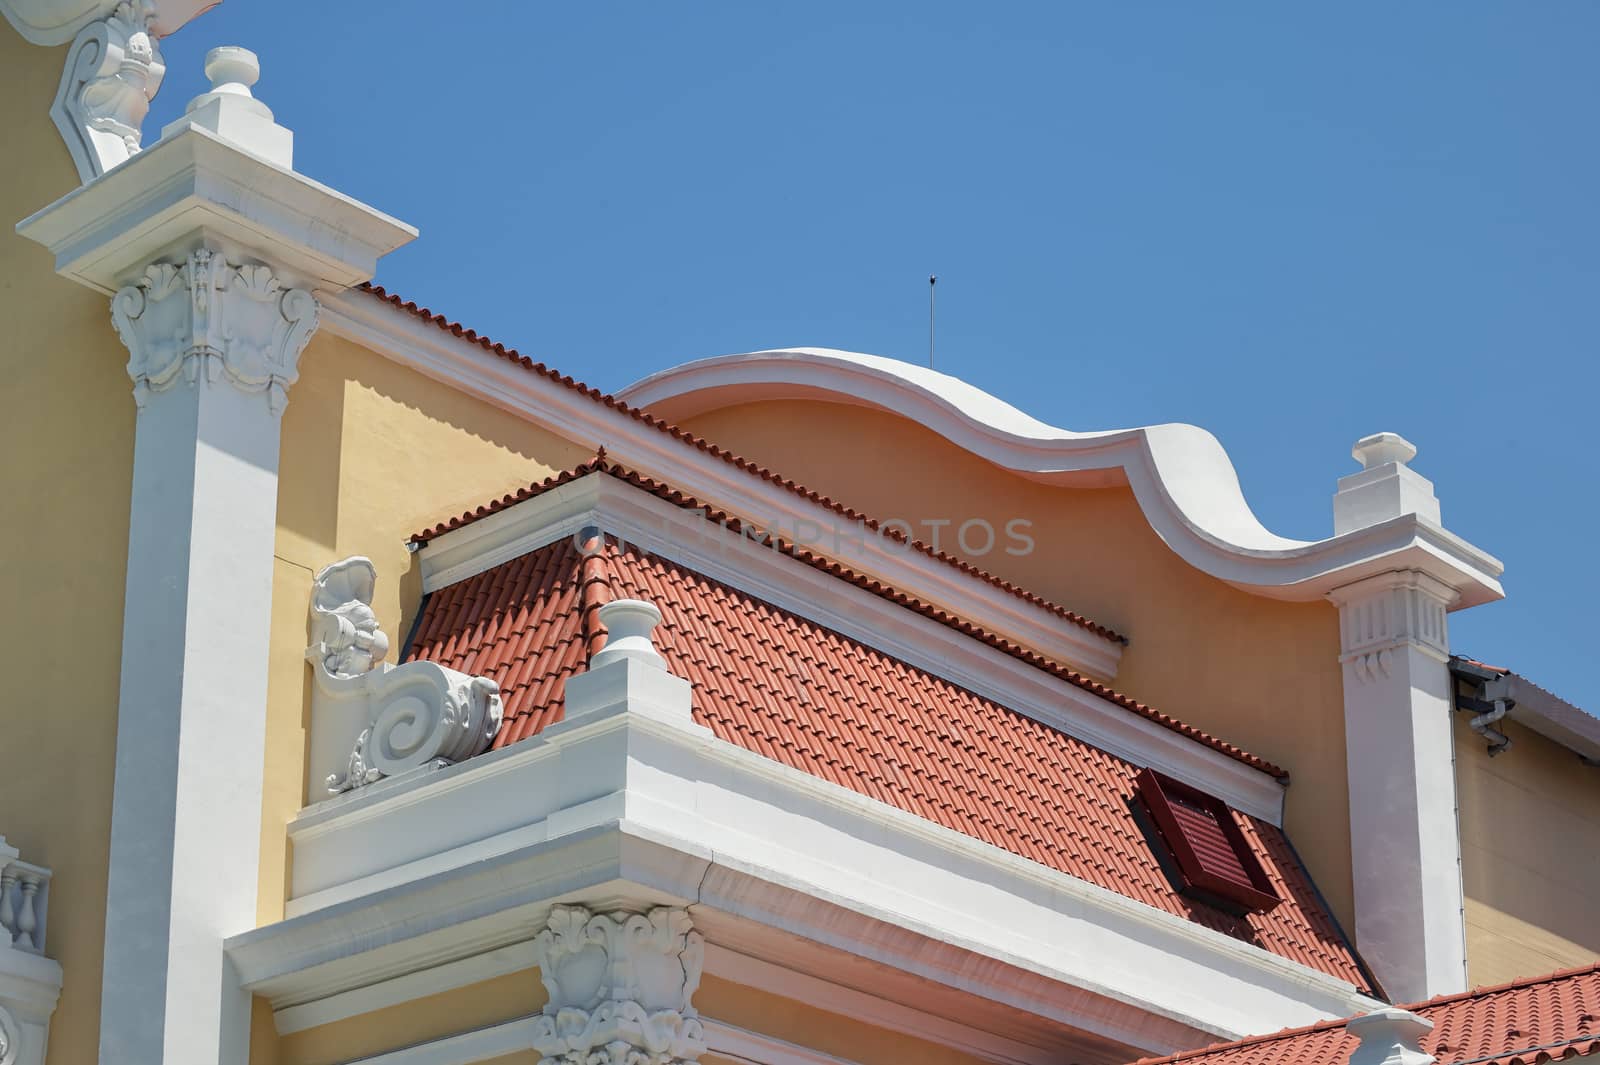 Roof tile pattern over blue sky by jordachelr